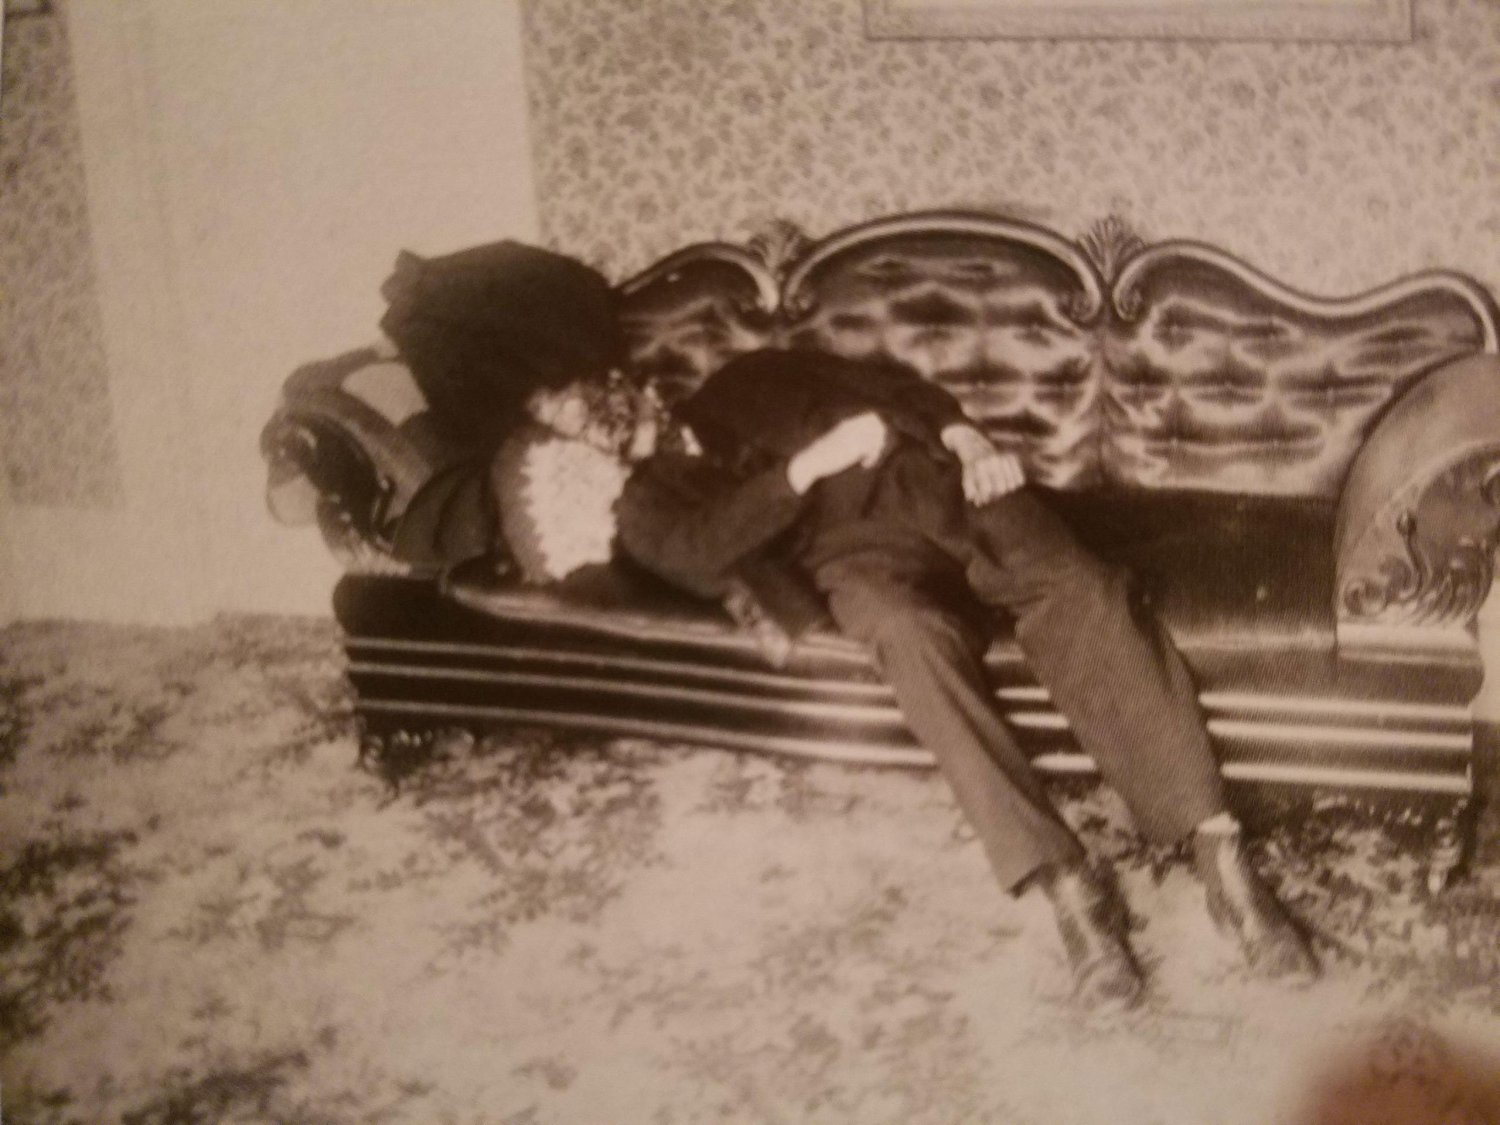 Lizzie Borden Murders: Did Lizzie Kill Her Parents?